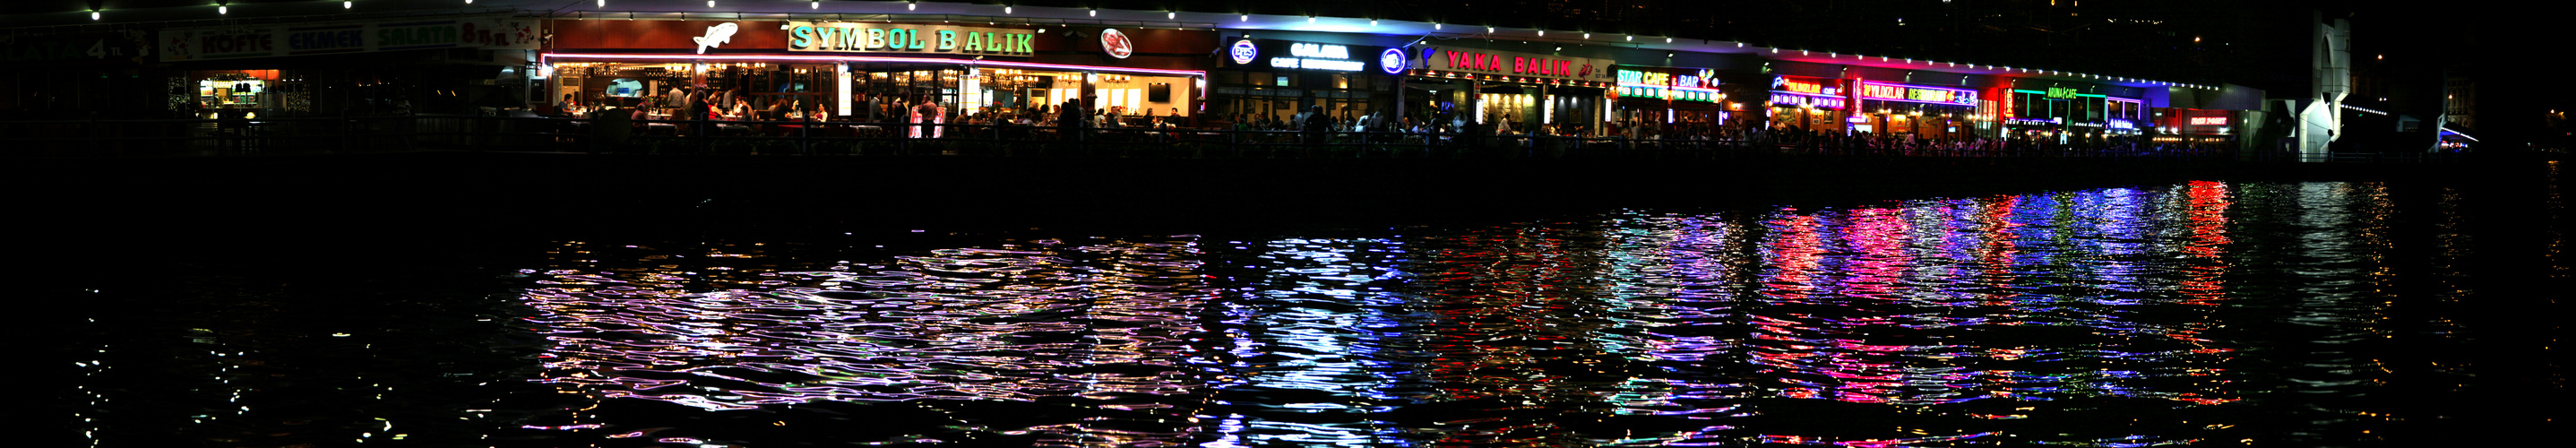 Istanbul 2010 - 02